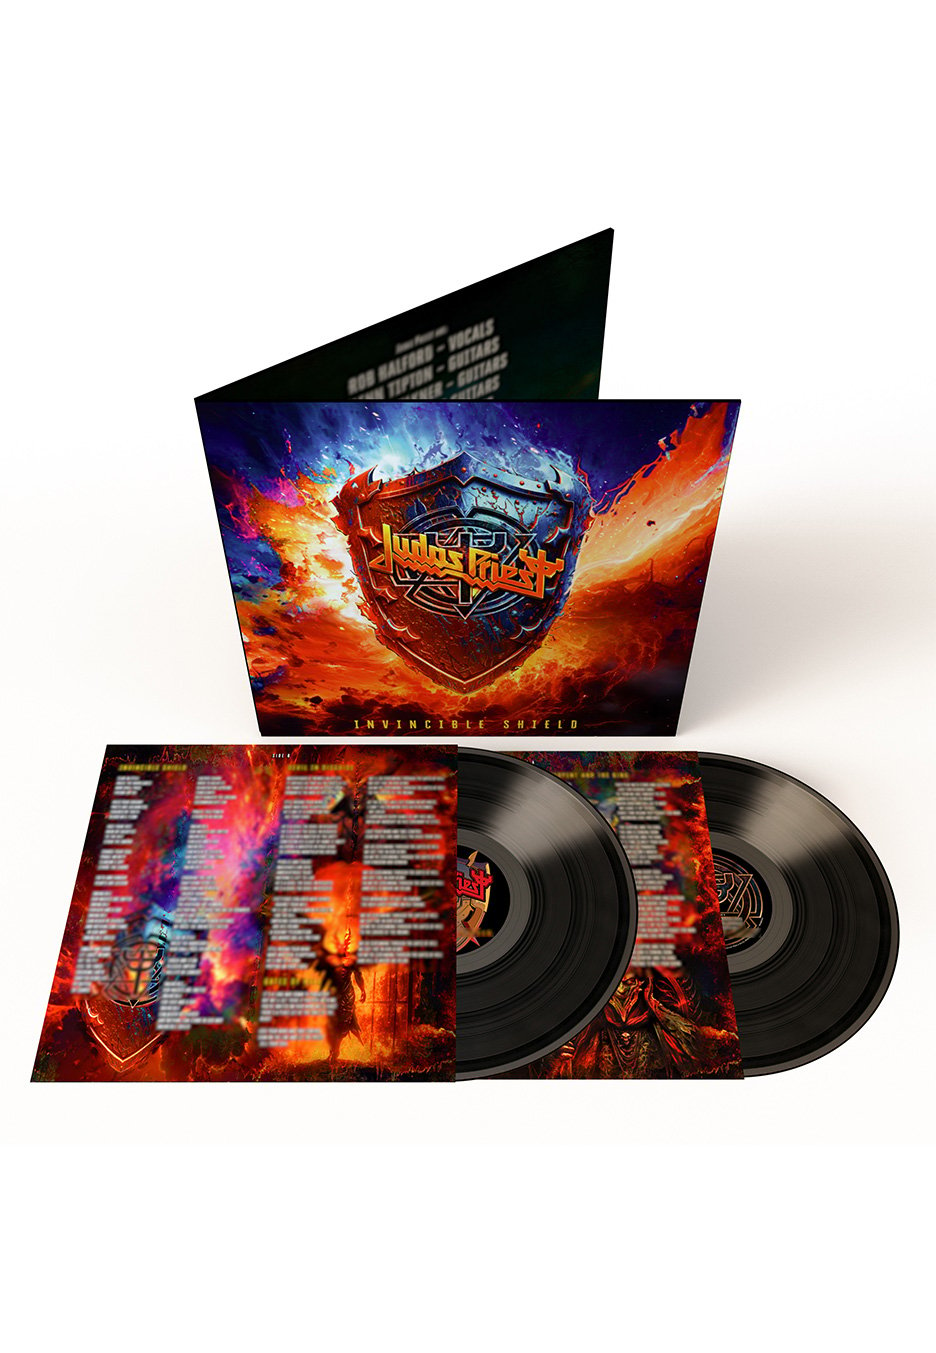 Judas Priest - Invincible Shield Ltd. Alternative Artwork - 2 Vinyl